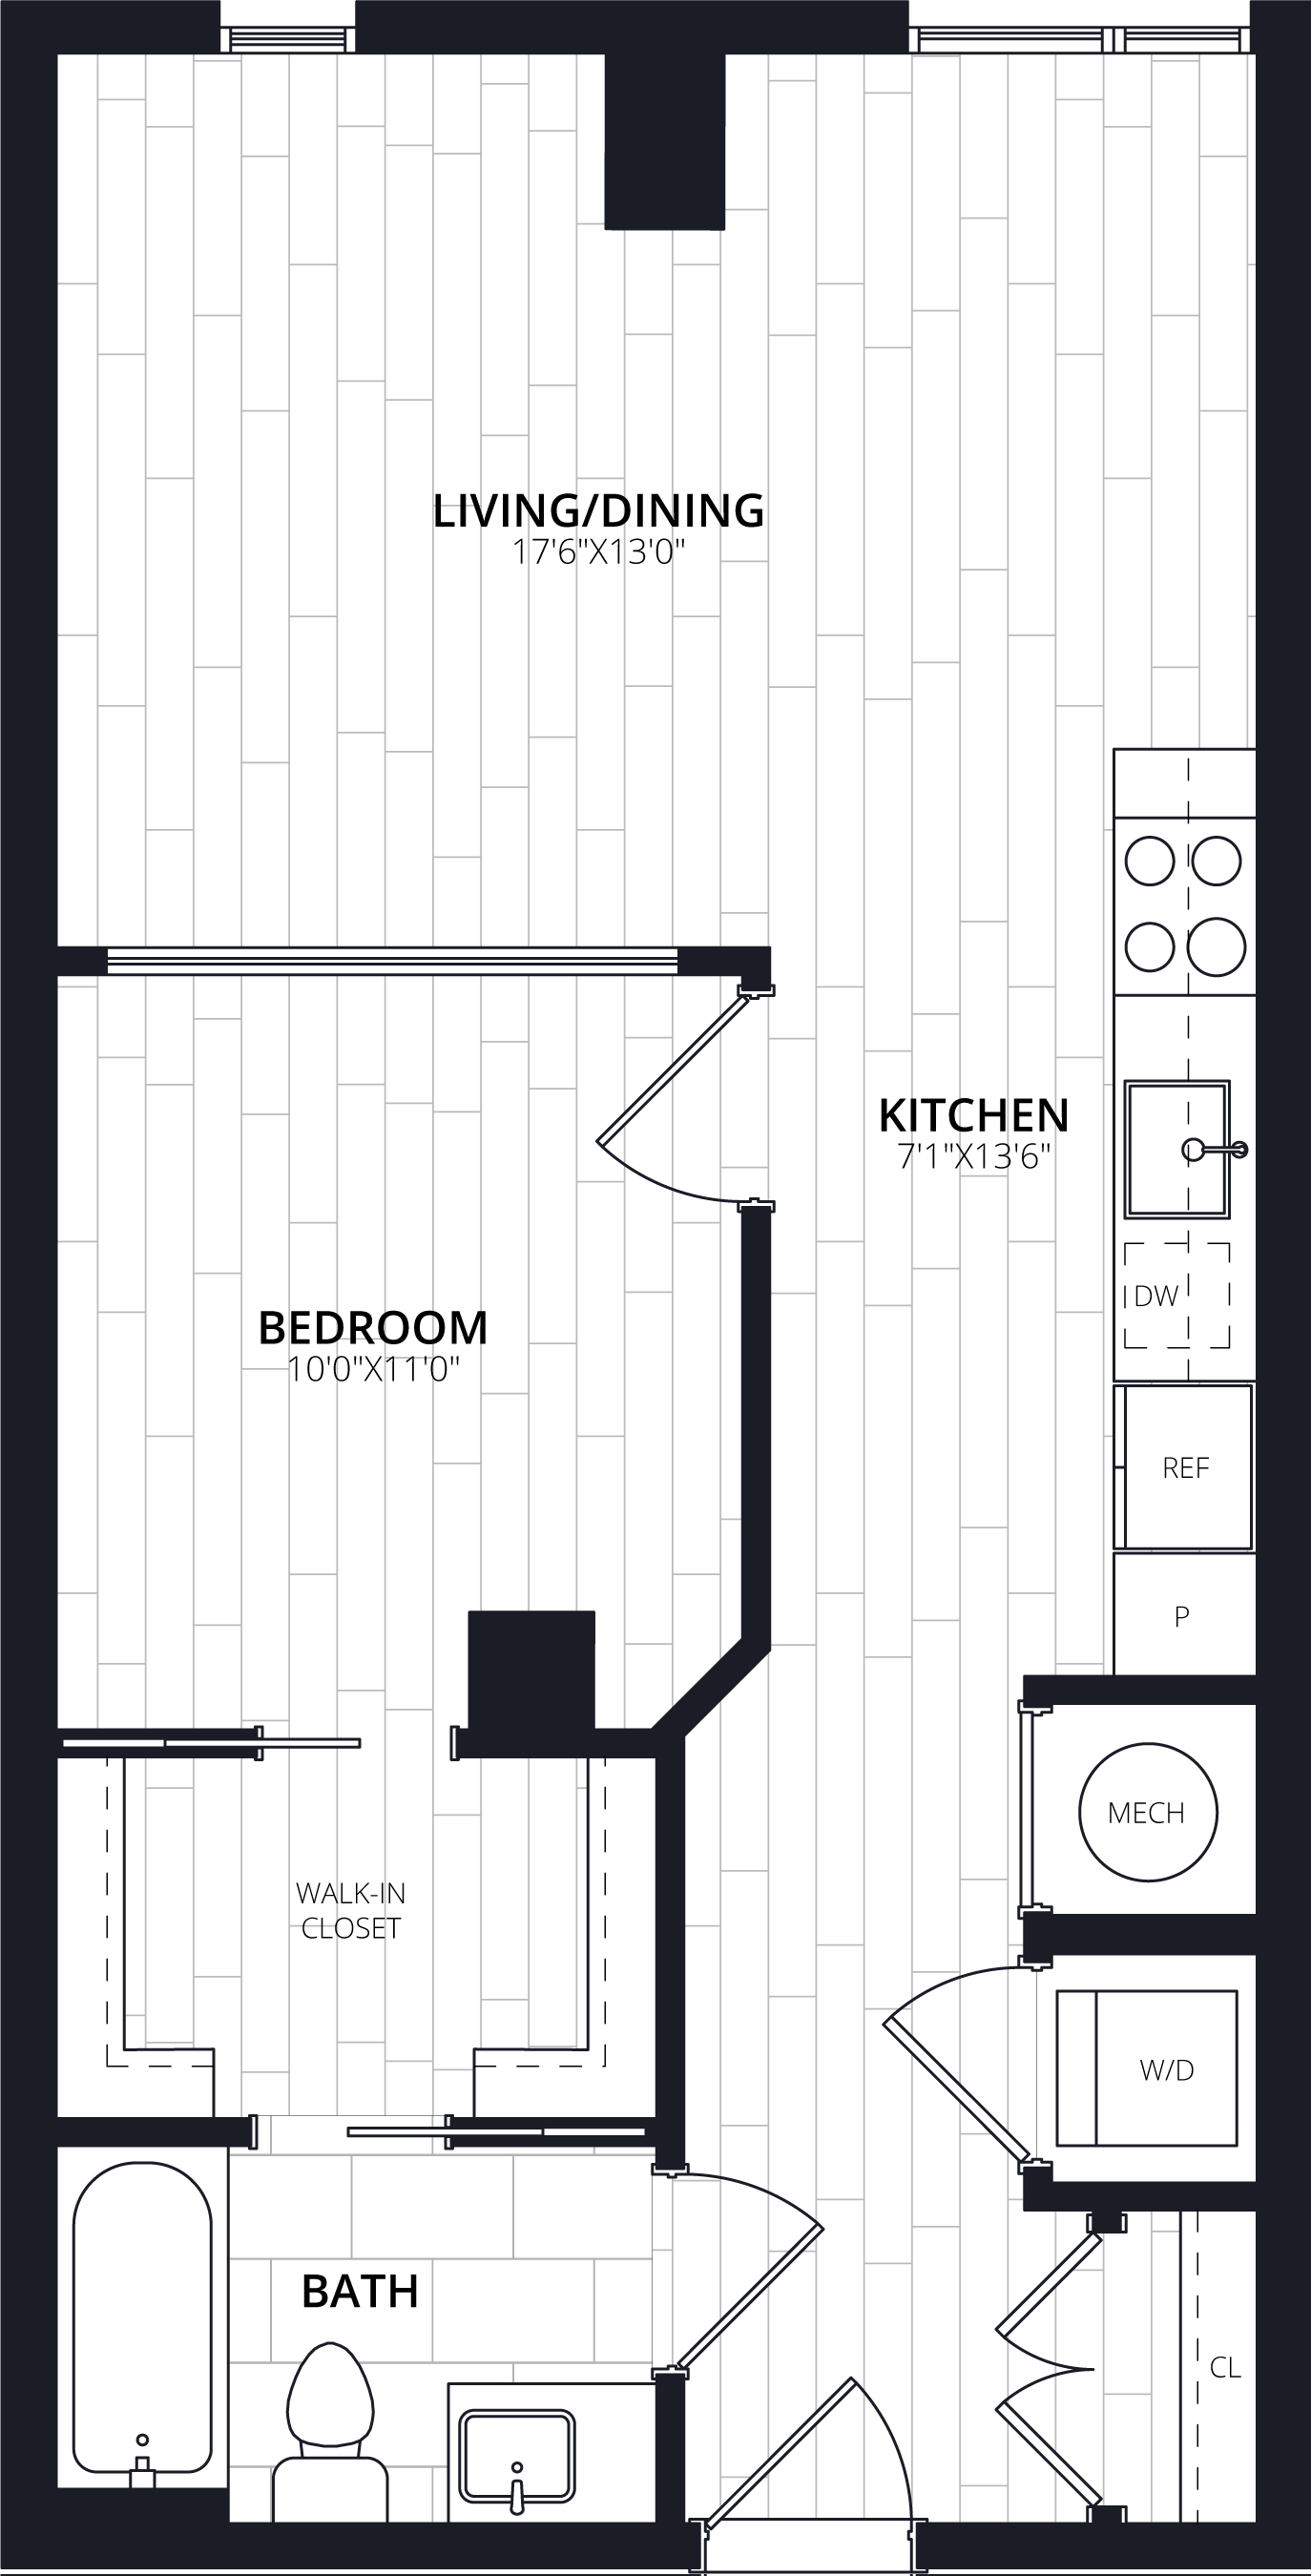 Floorplan image of apartment 212